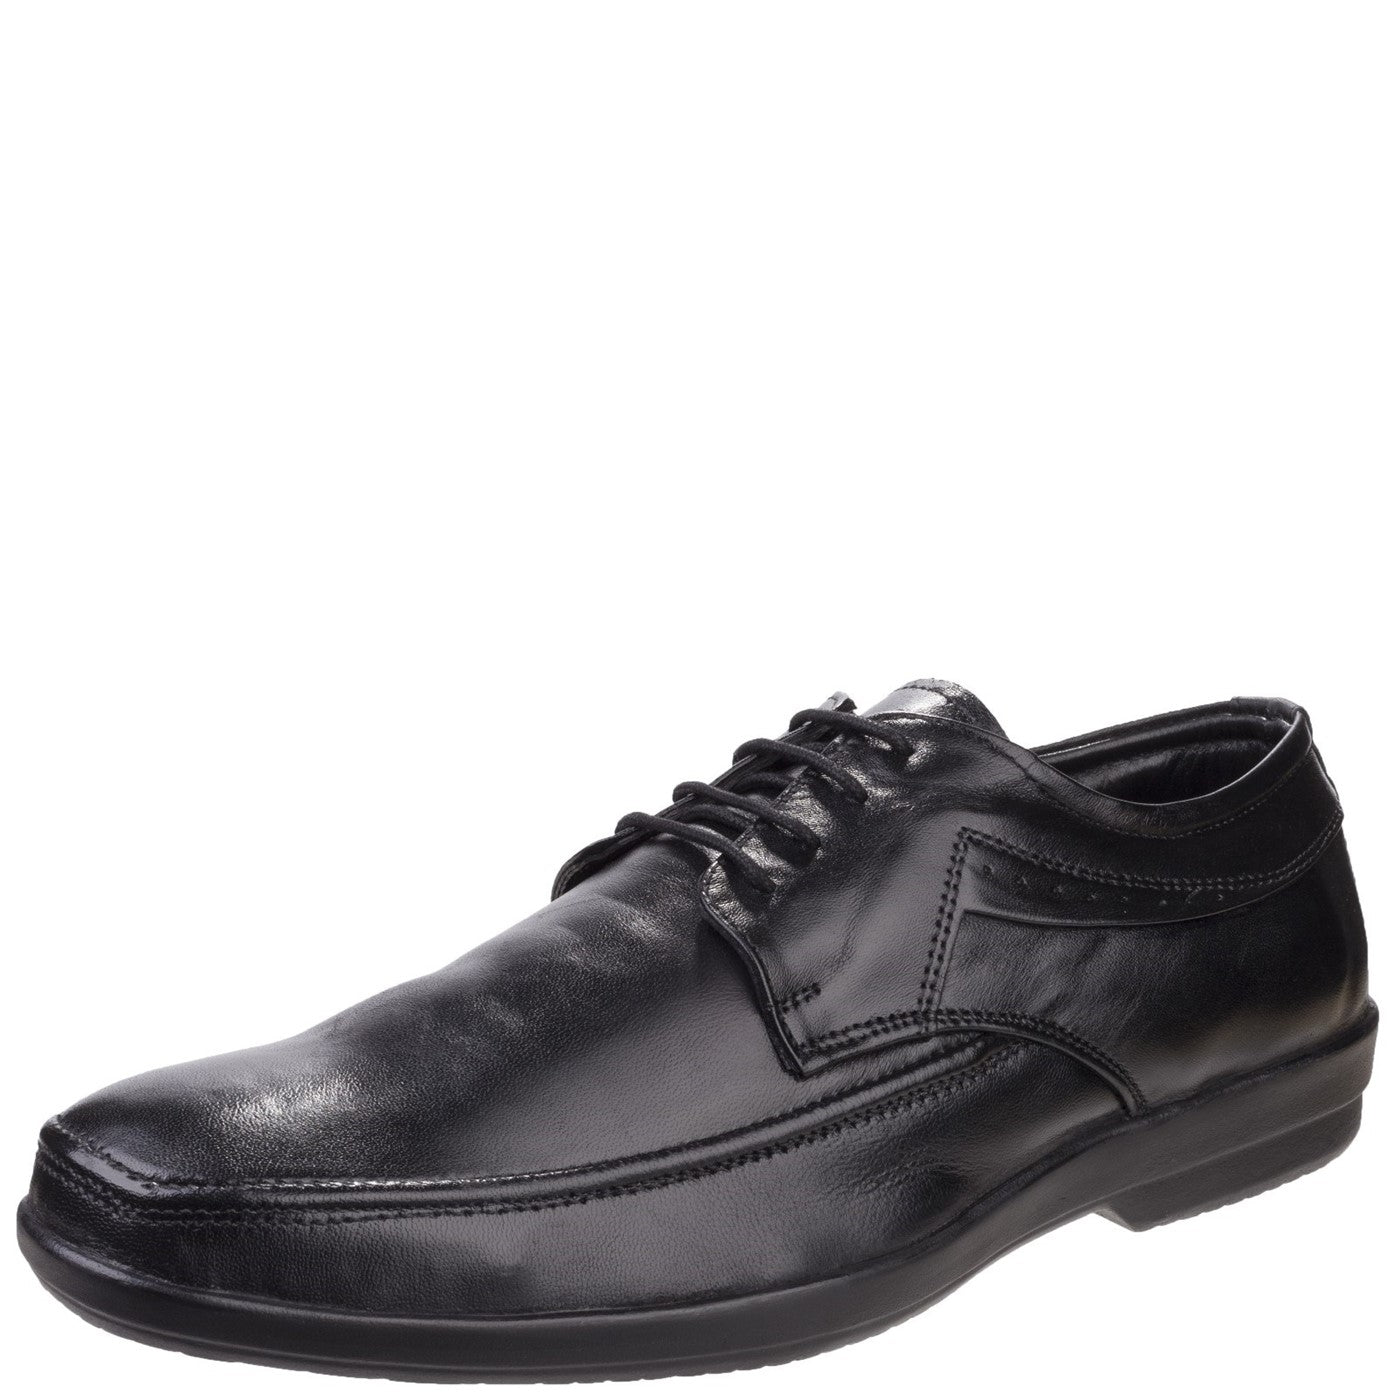 Fleet & Foster Dave Apron Toe Oxford Formal Shoe - Black 11